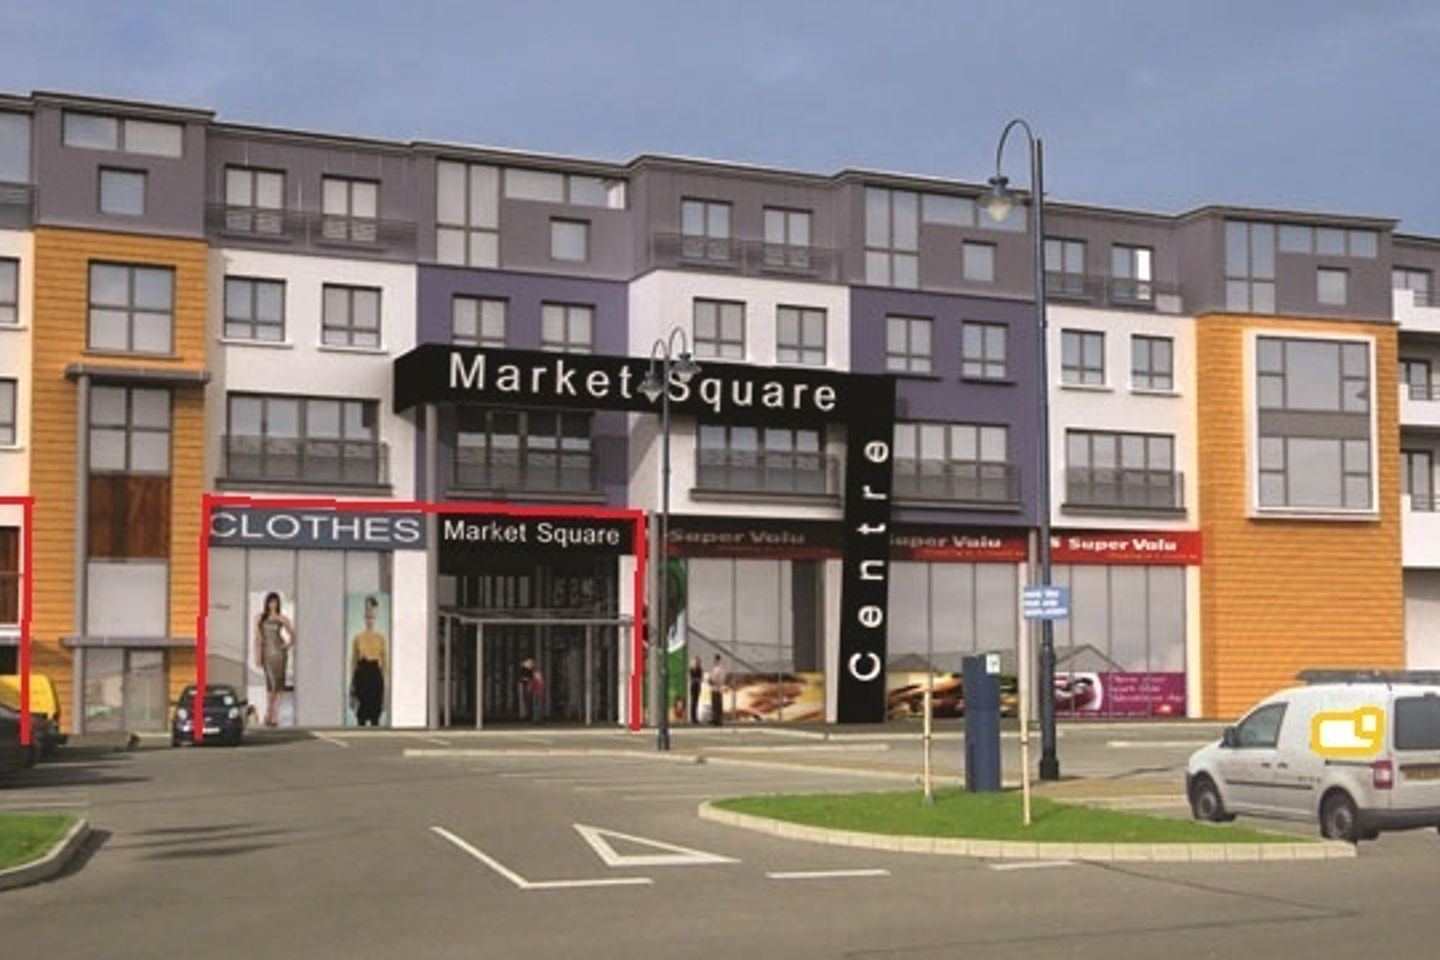 Market Square Shopping centre, Station Road, Bundoran, Co. Donegal